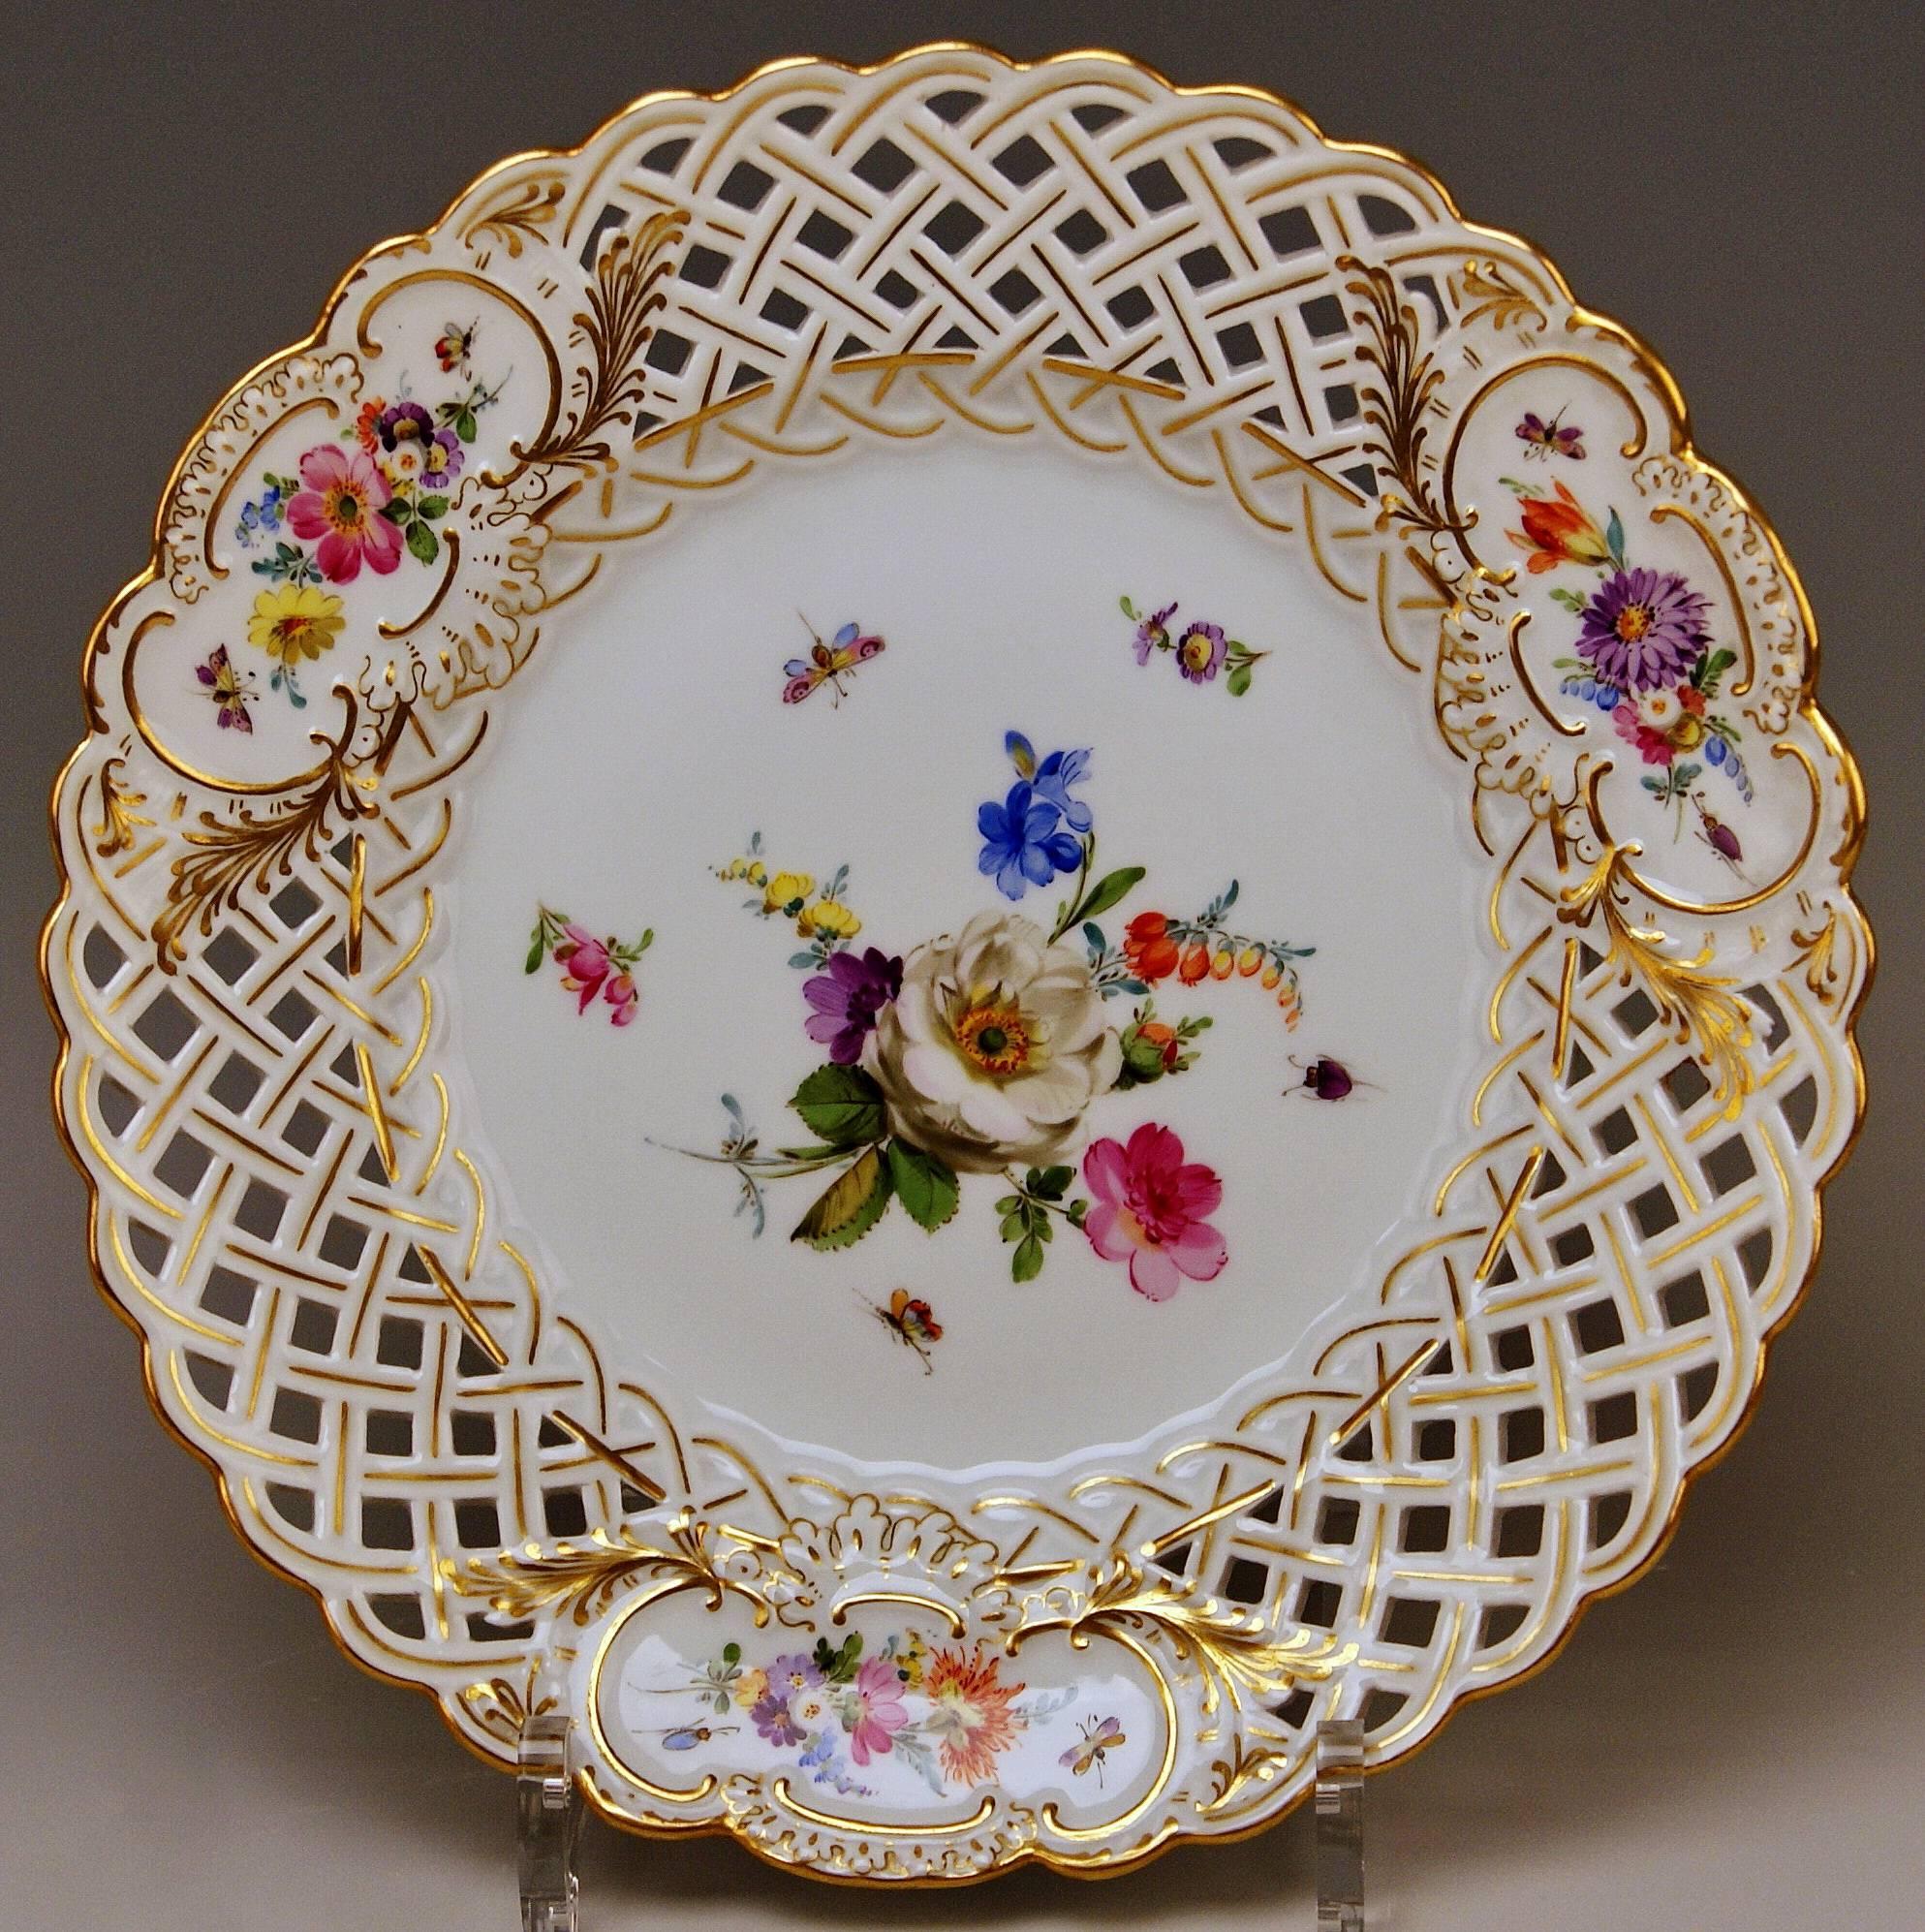 Porcelain Meissen Plates Vintage Reticulated Edge Multicolored Flower Paintings circa 1870